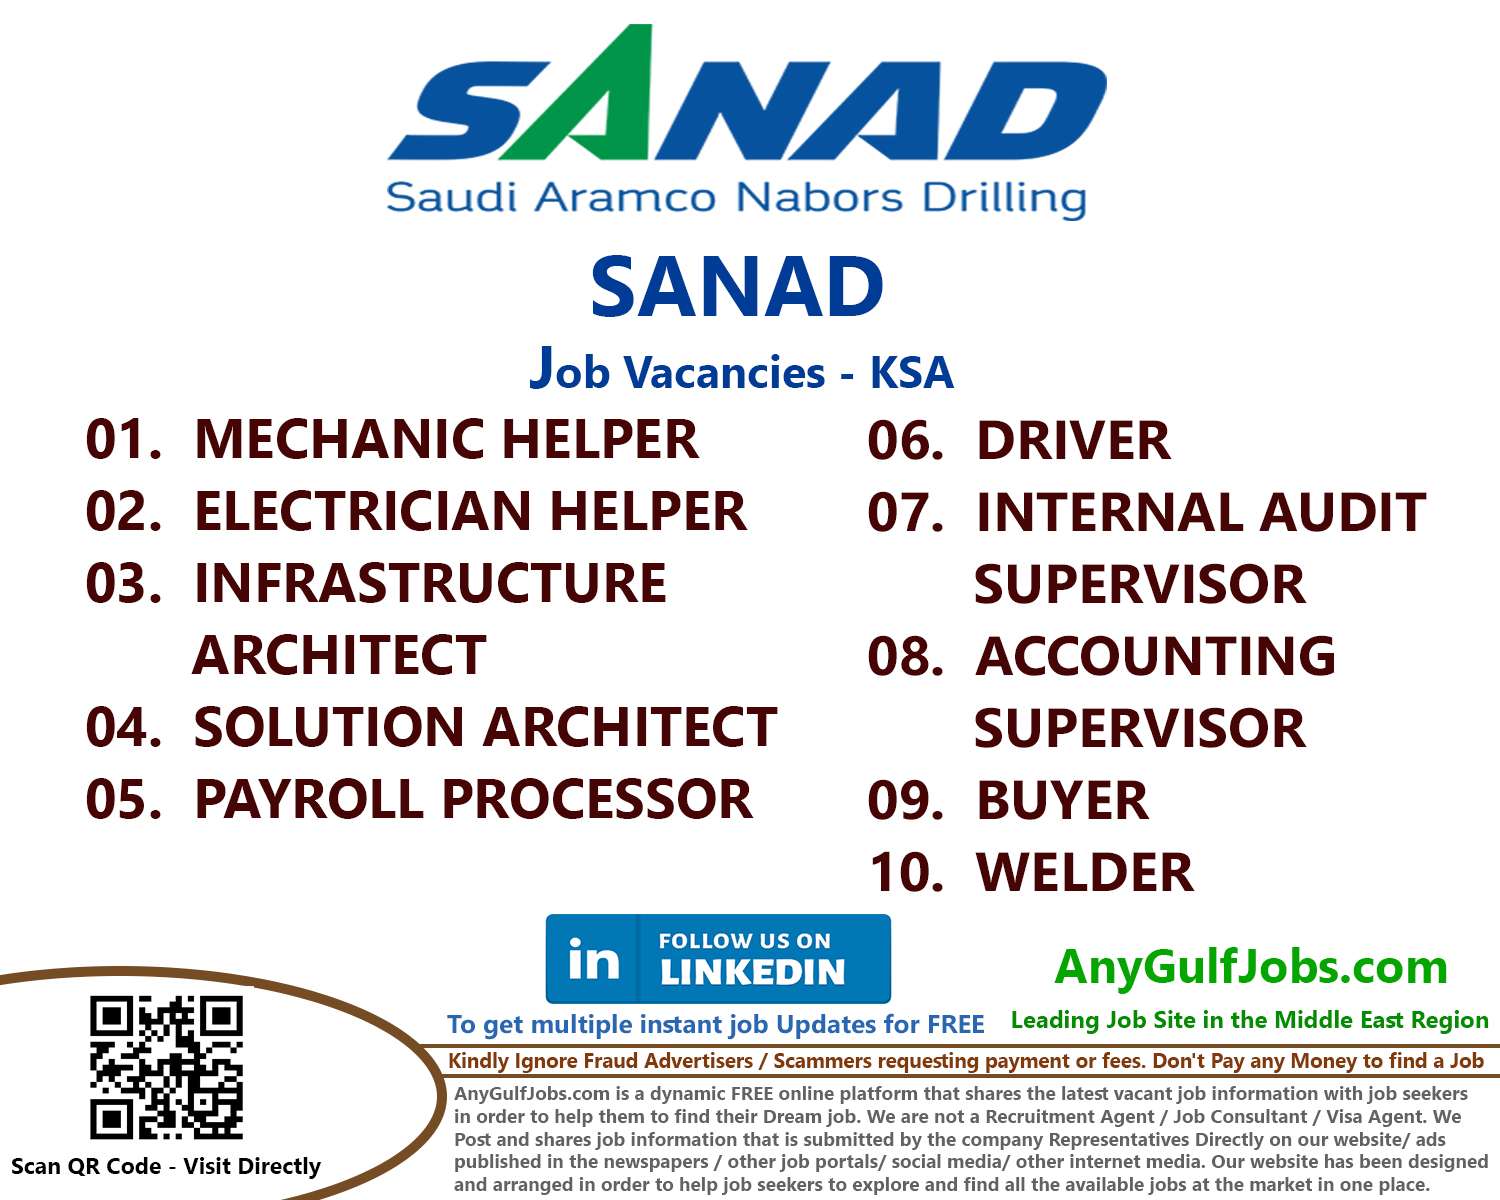 List of SANAD Jobs - KSA